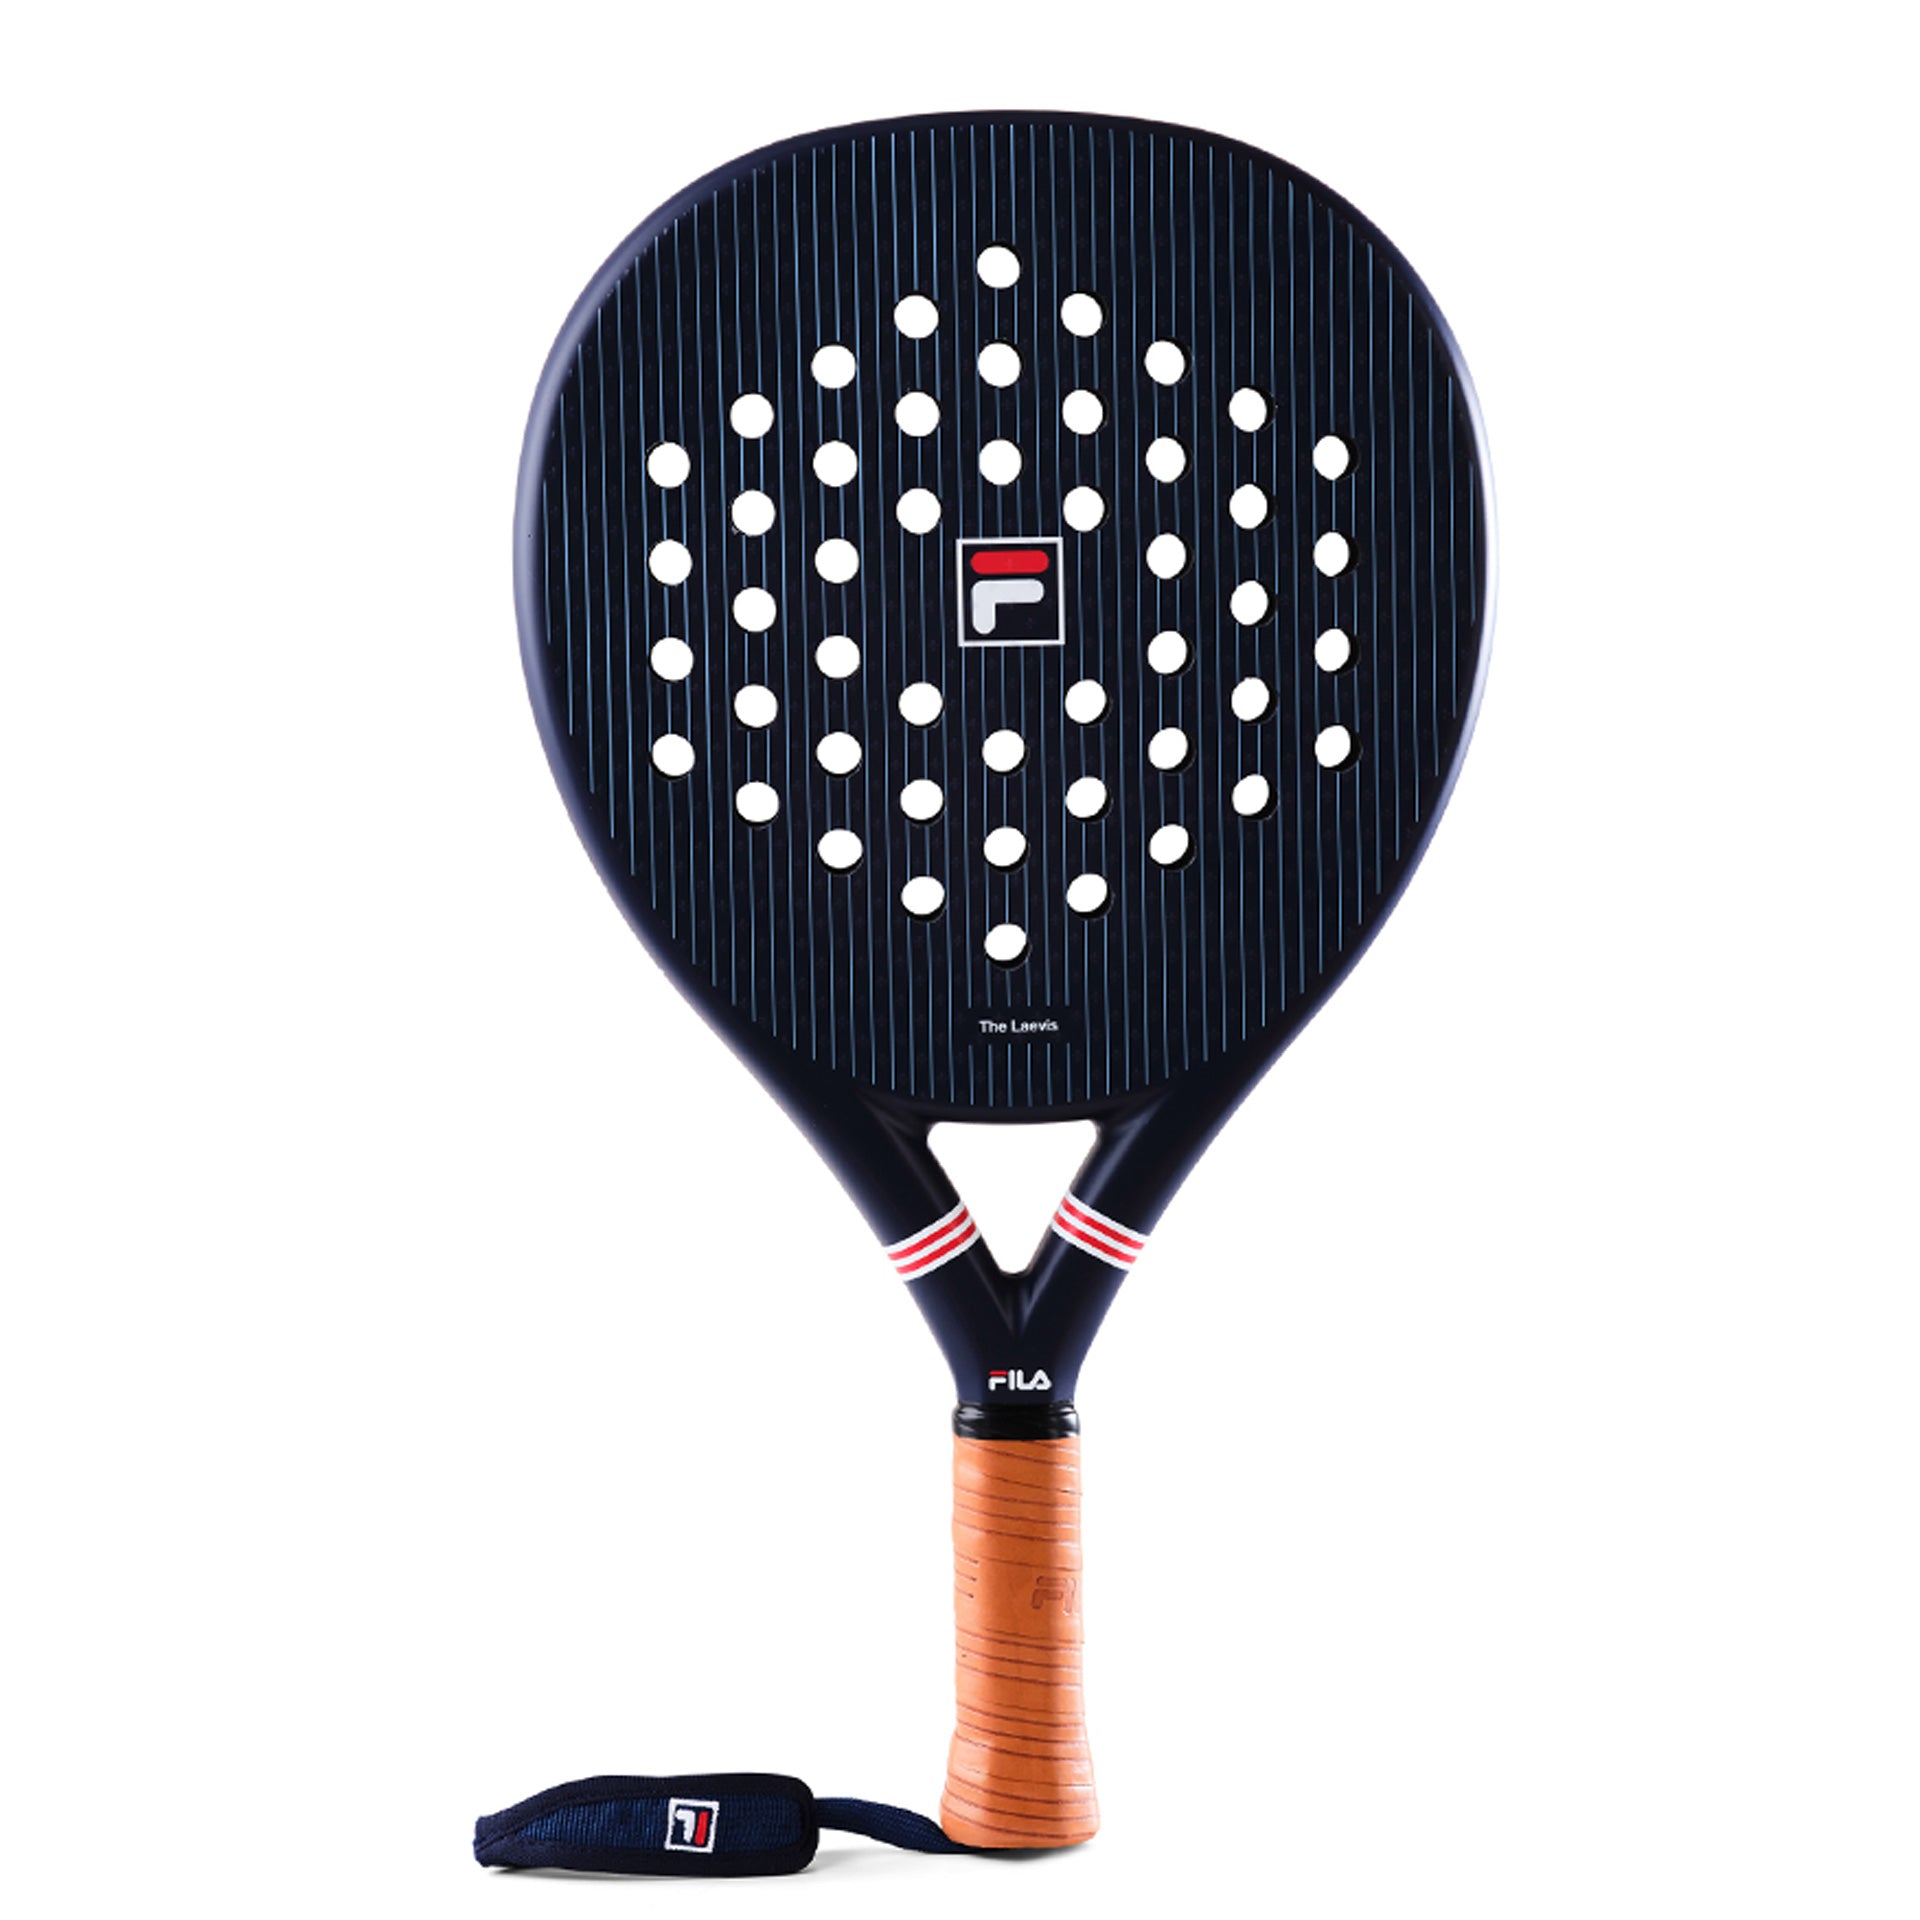  Fila The Leavis padel racket